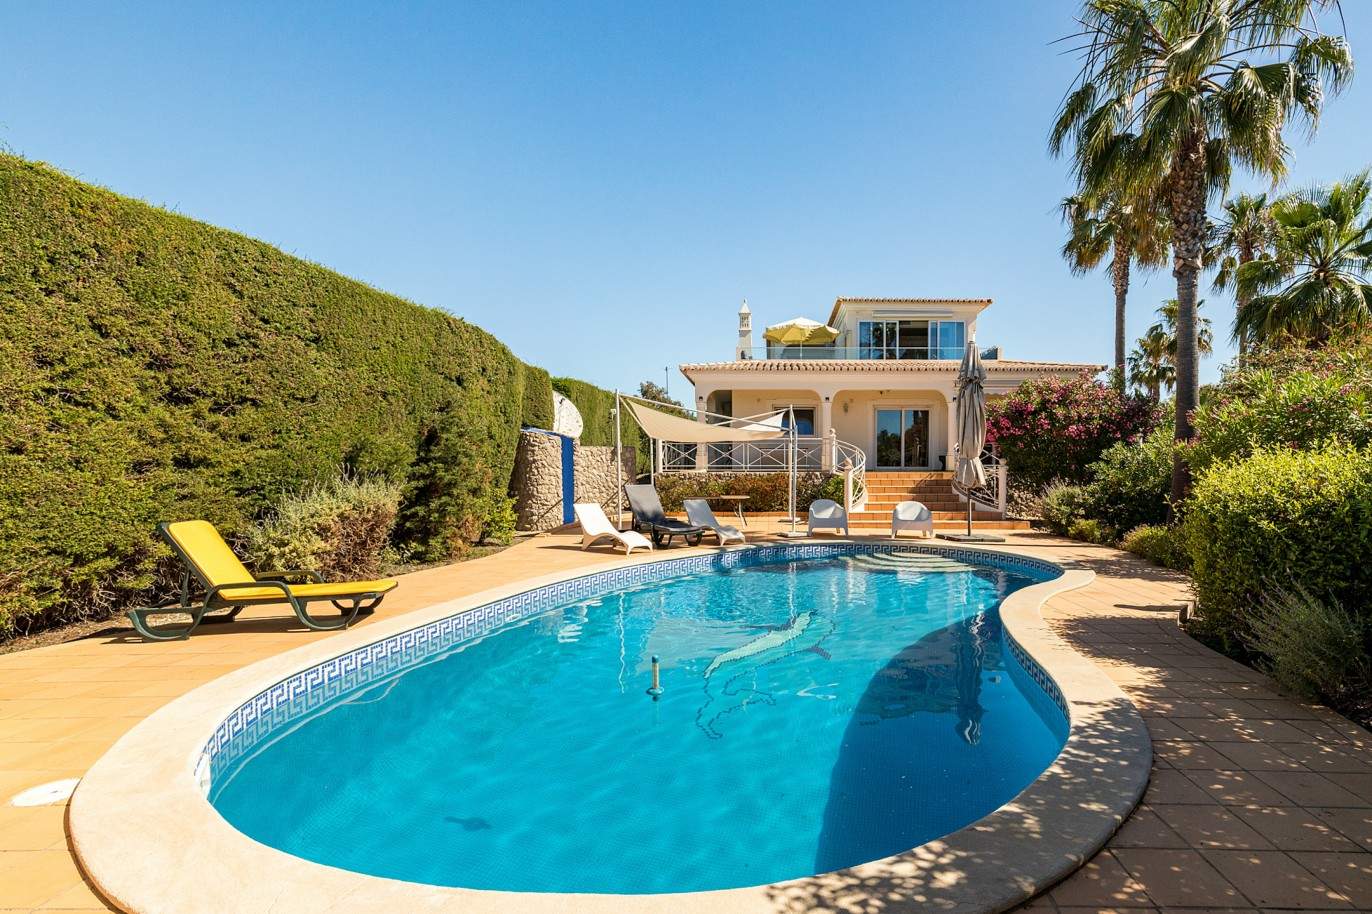 4 Bedroom Villa, with swimming pool, for sale, in Carvoeiro, Algarve_200508